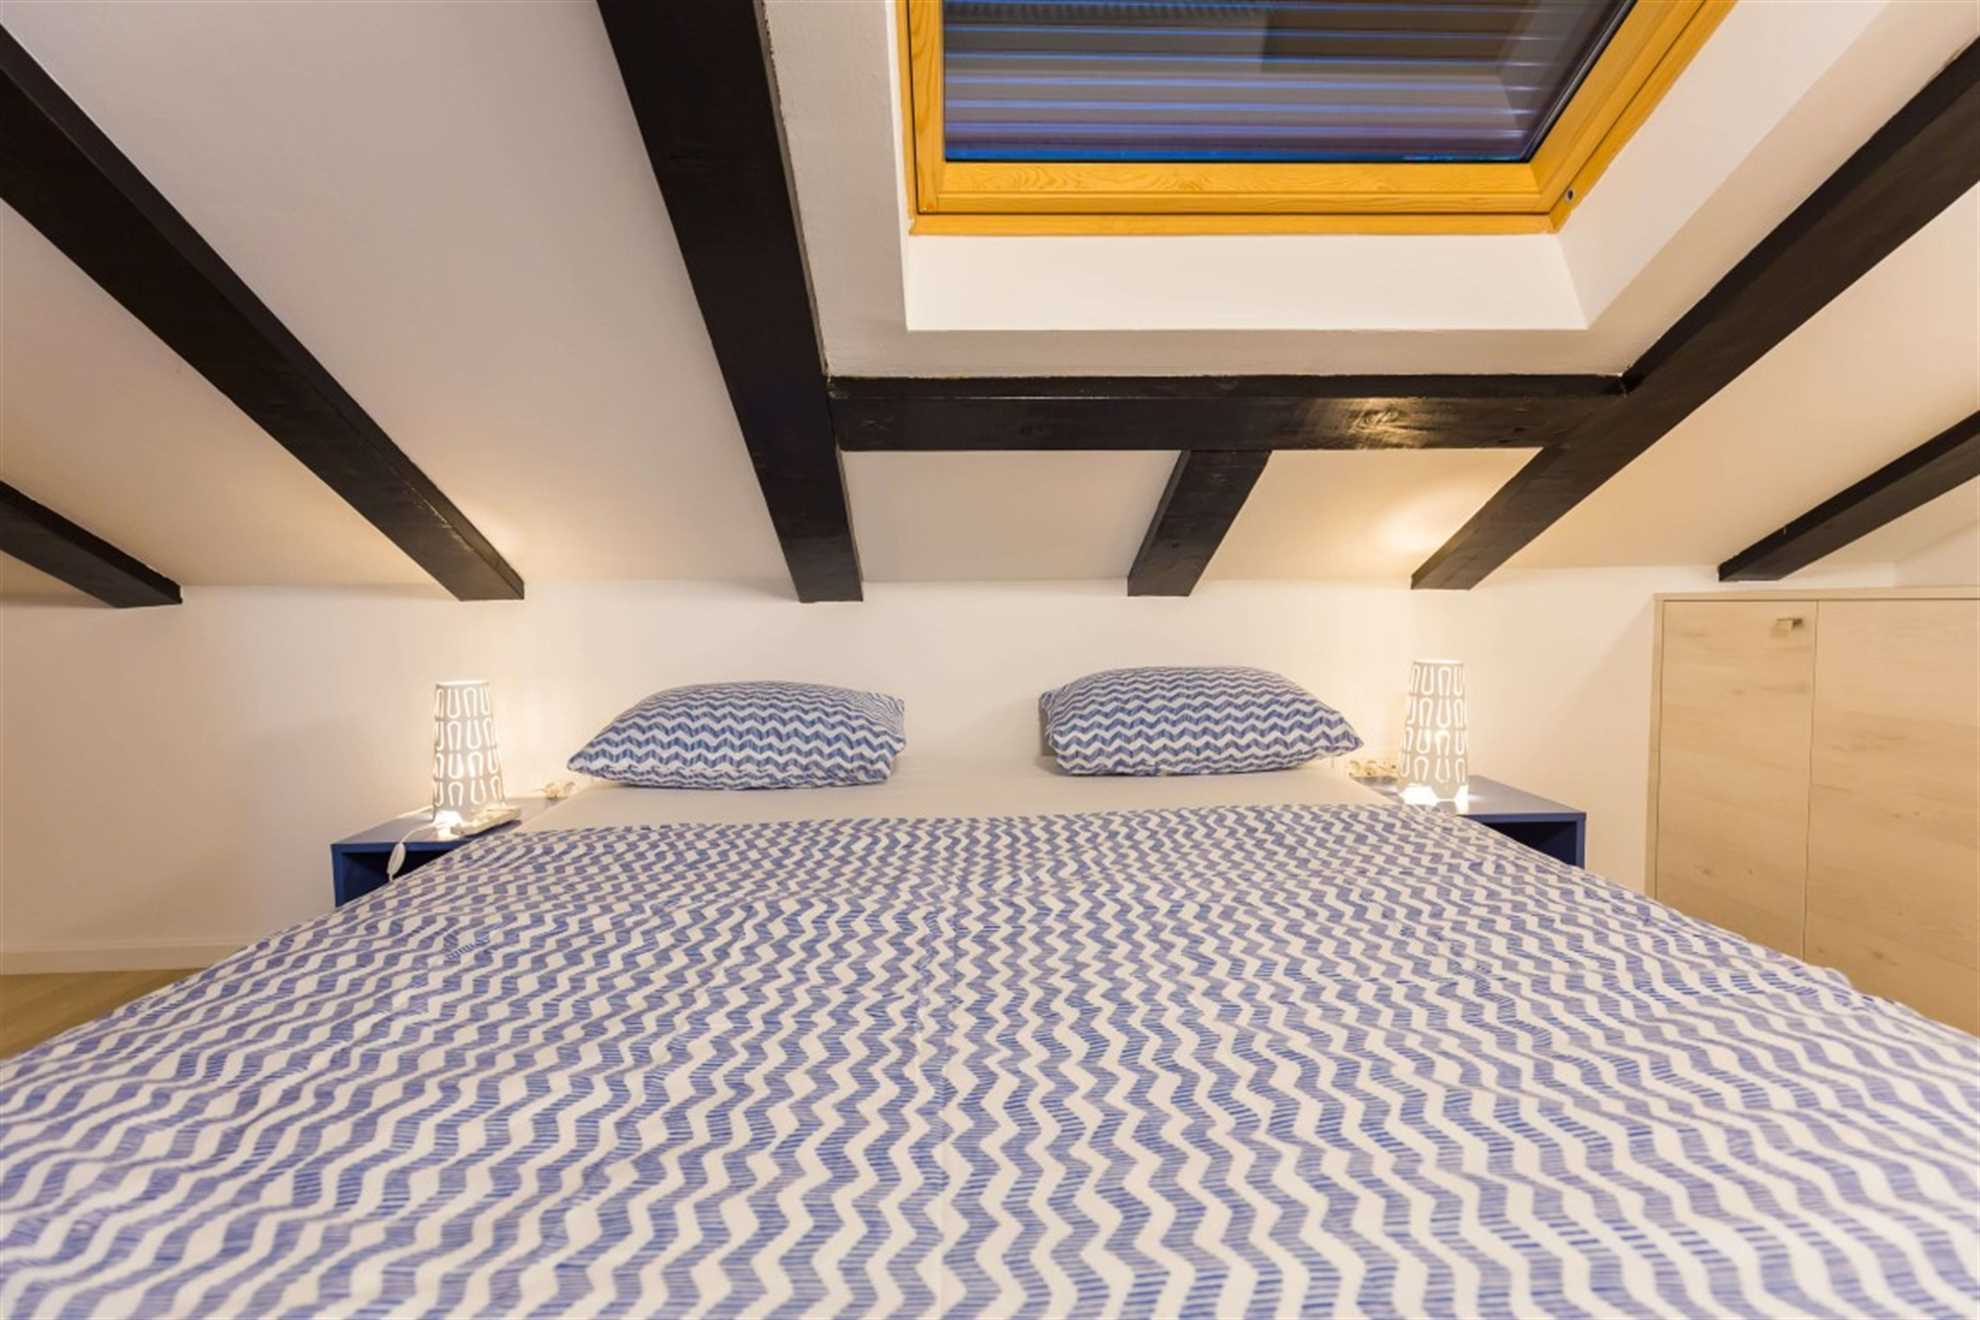 Lukas One Bedroom Loft Apartment 3pax For Rent In Dubrovnik